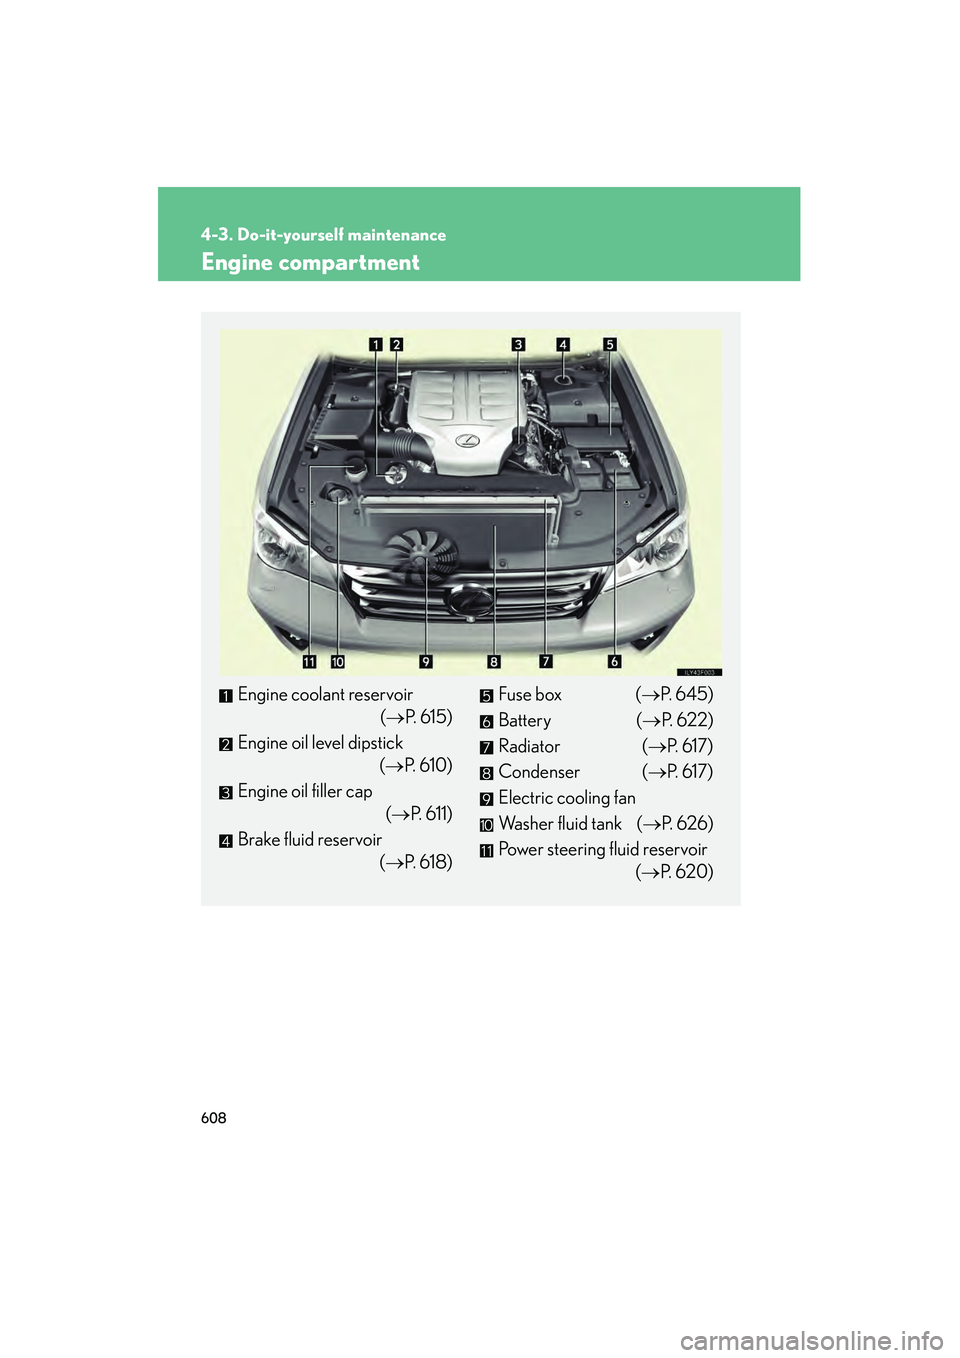 Lexus GX460 2010  Owners Manual 608
4-3. Do-it-yourself maintenance
GX460_CANADA (OM60F29U)
Engine compartment
Engine coolant reservoir(→P. 615)
Engine oil level dipstick (→P.  6 1 0 )
Engine oil filler cap (→P.  6 1 1 )
Brake